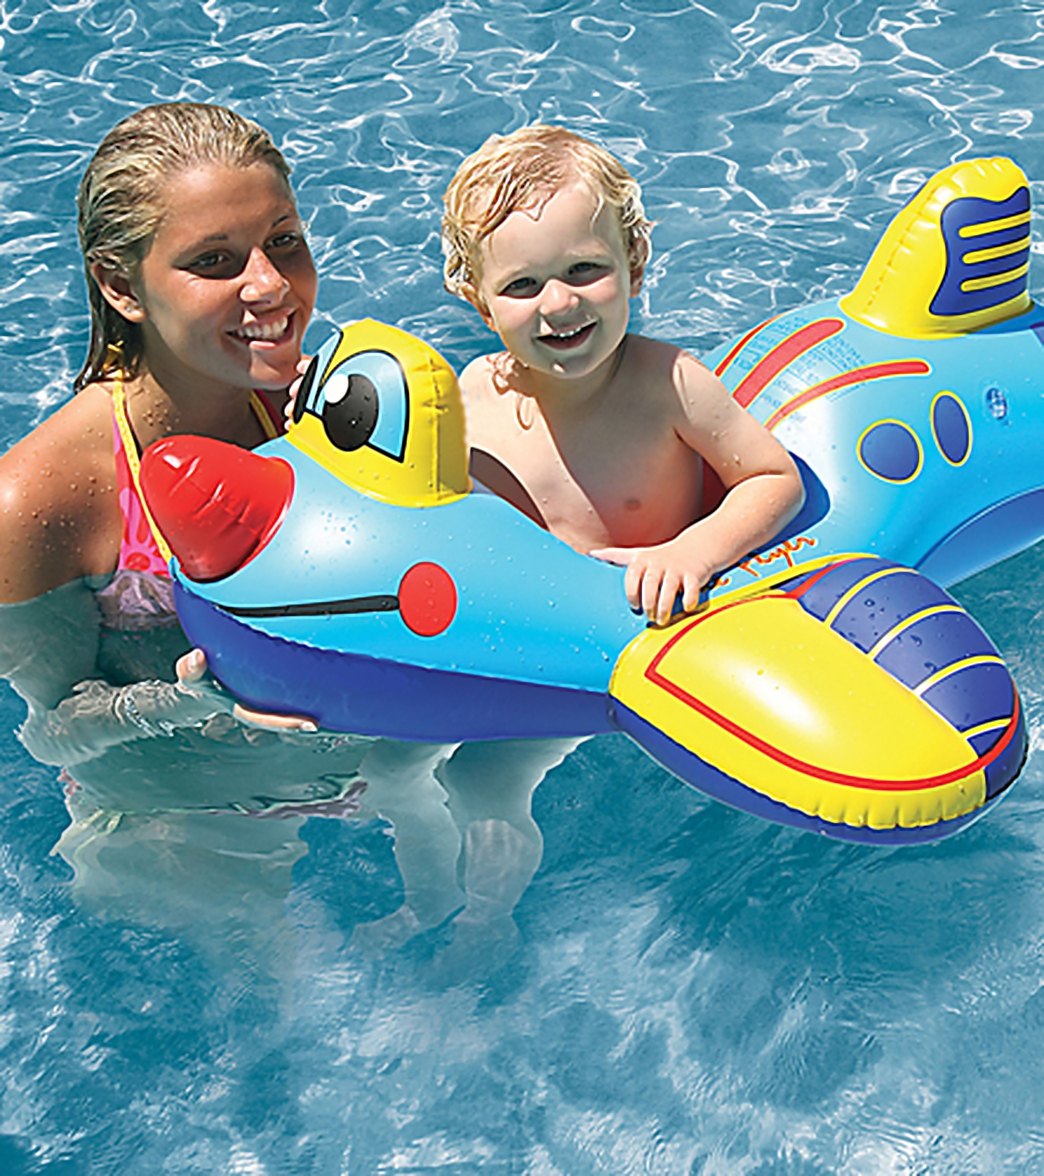 Poolmaster Transportation Baby Rider at SwimOutlet.com